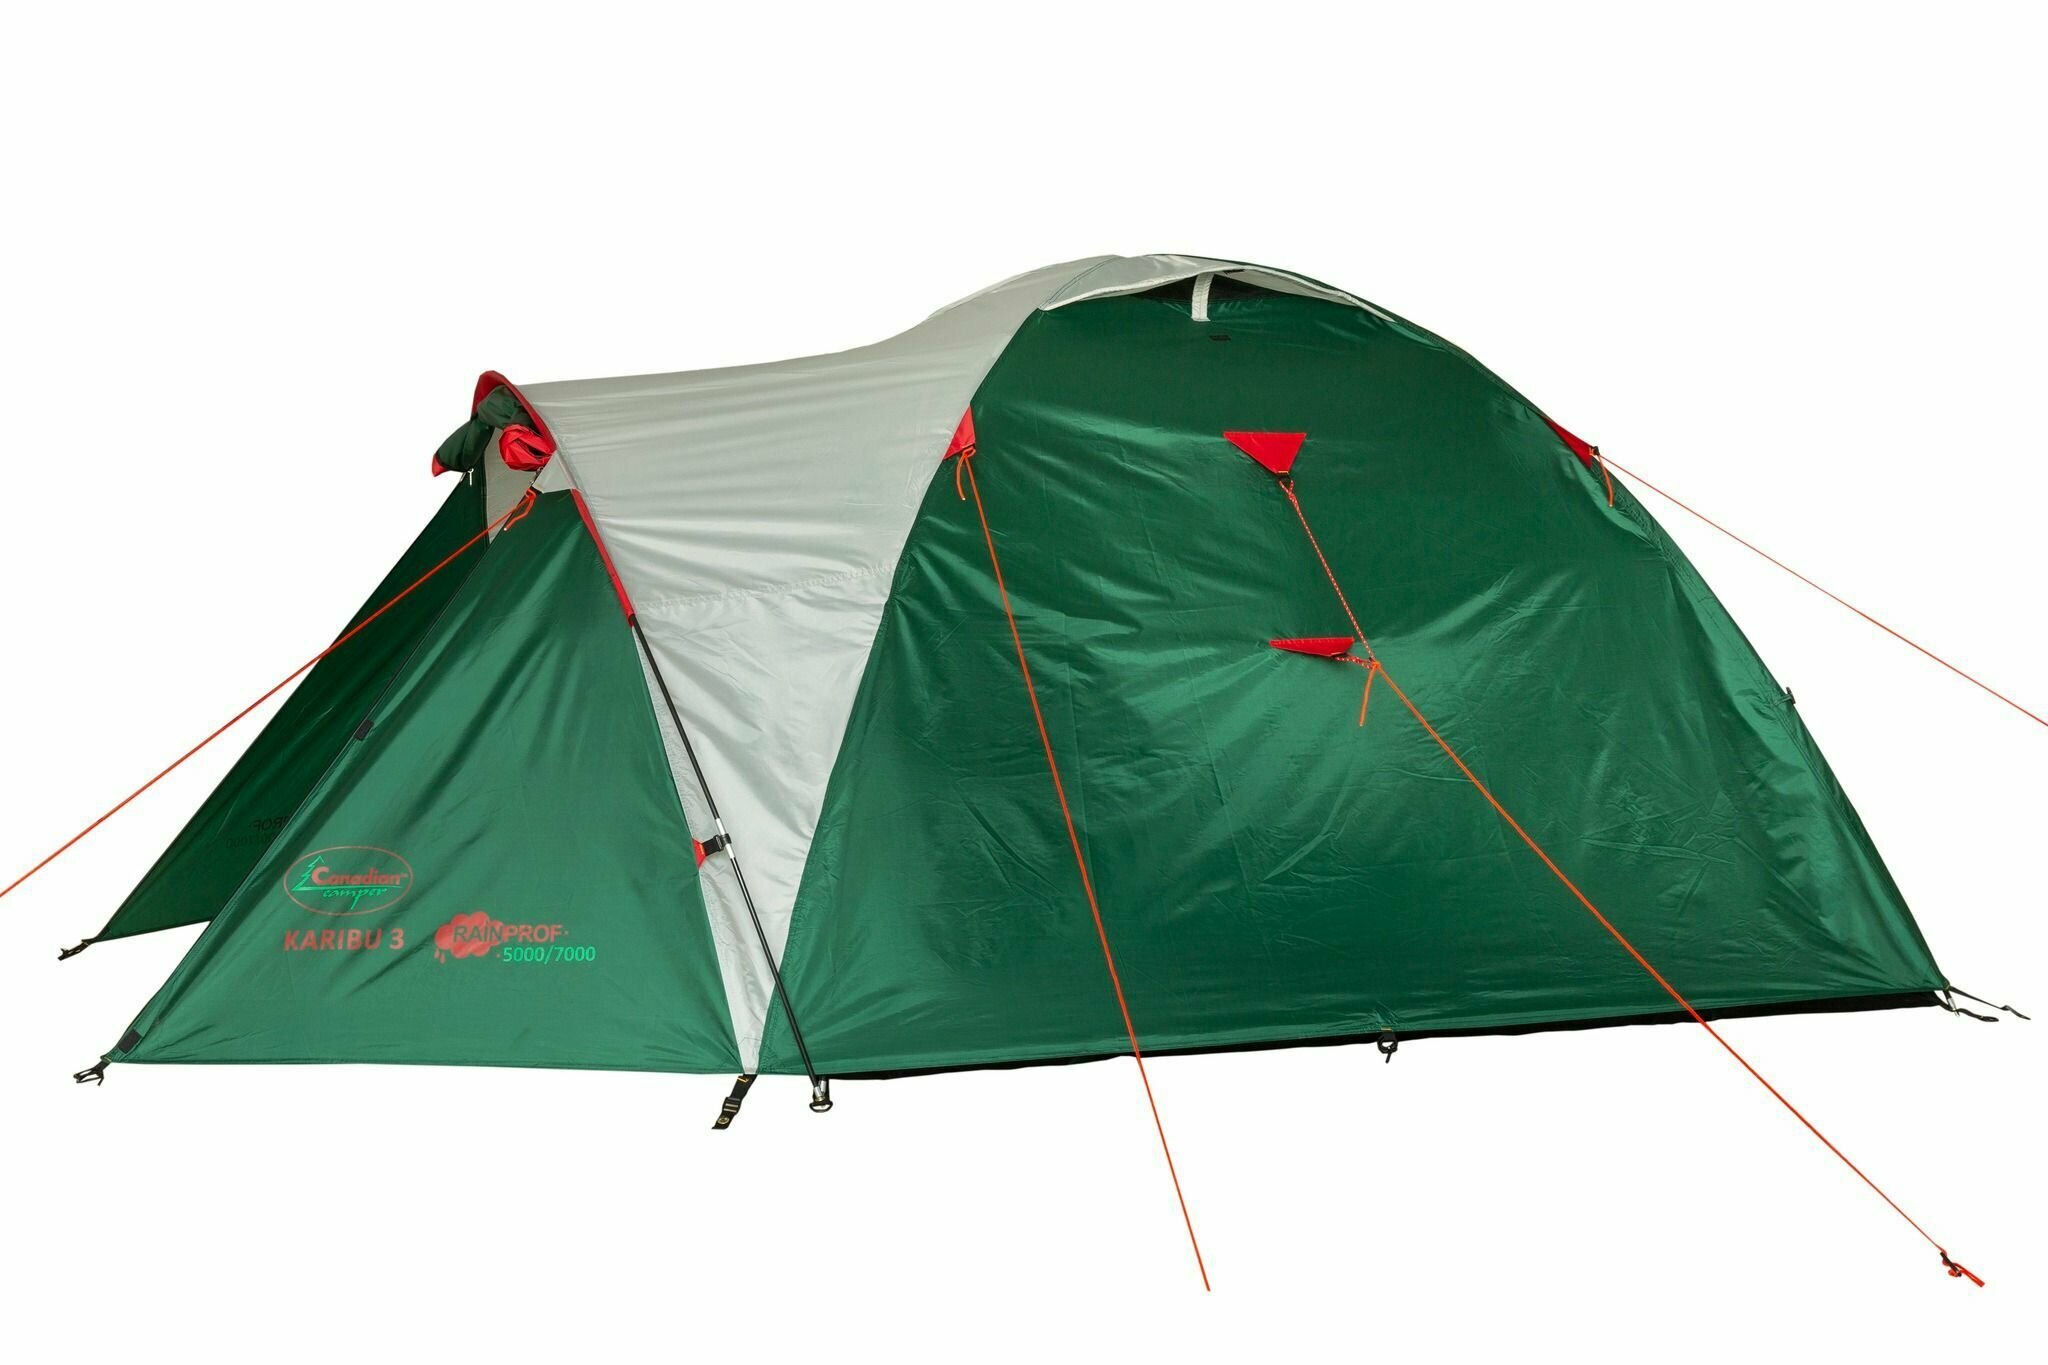 Палатка INDIANA KARIBU 4 (цвет woodland дуги 9,5 мм) 393-557